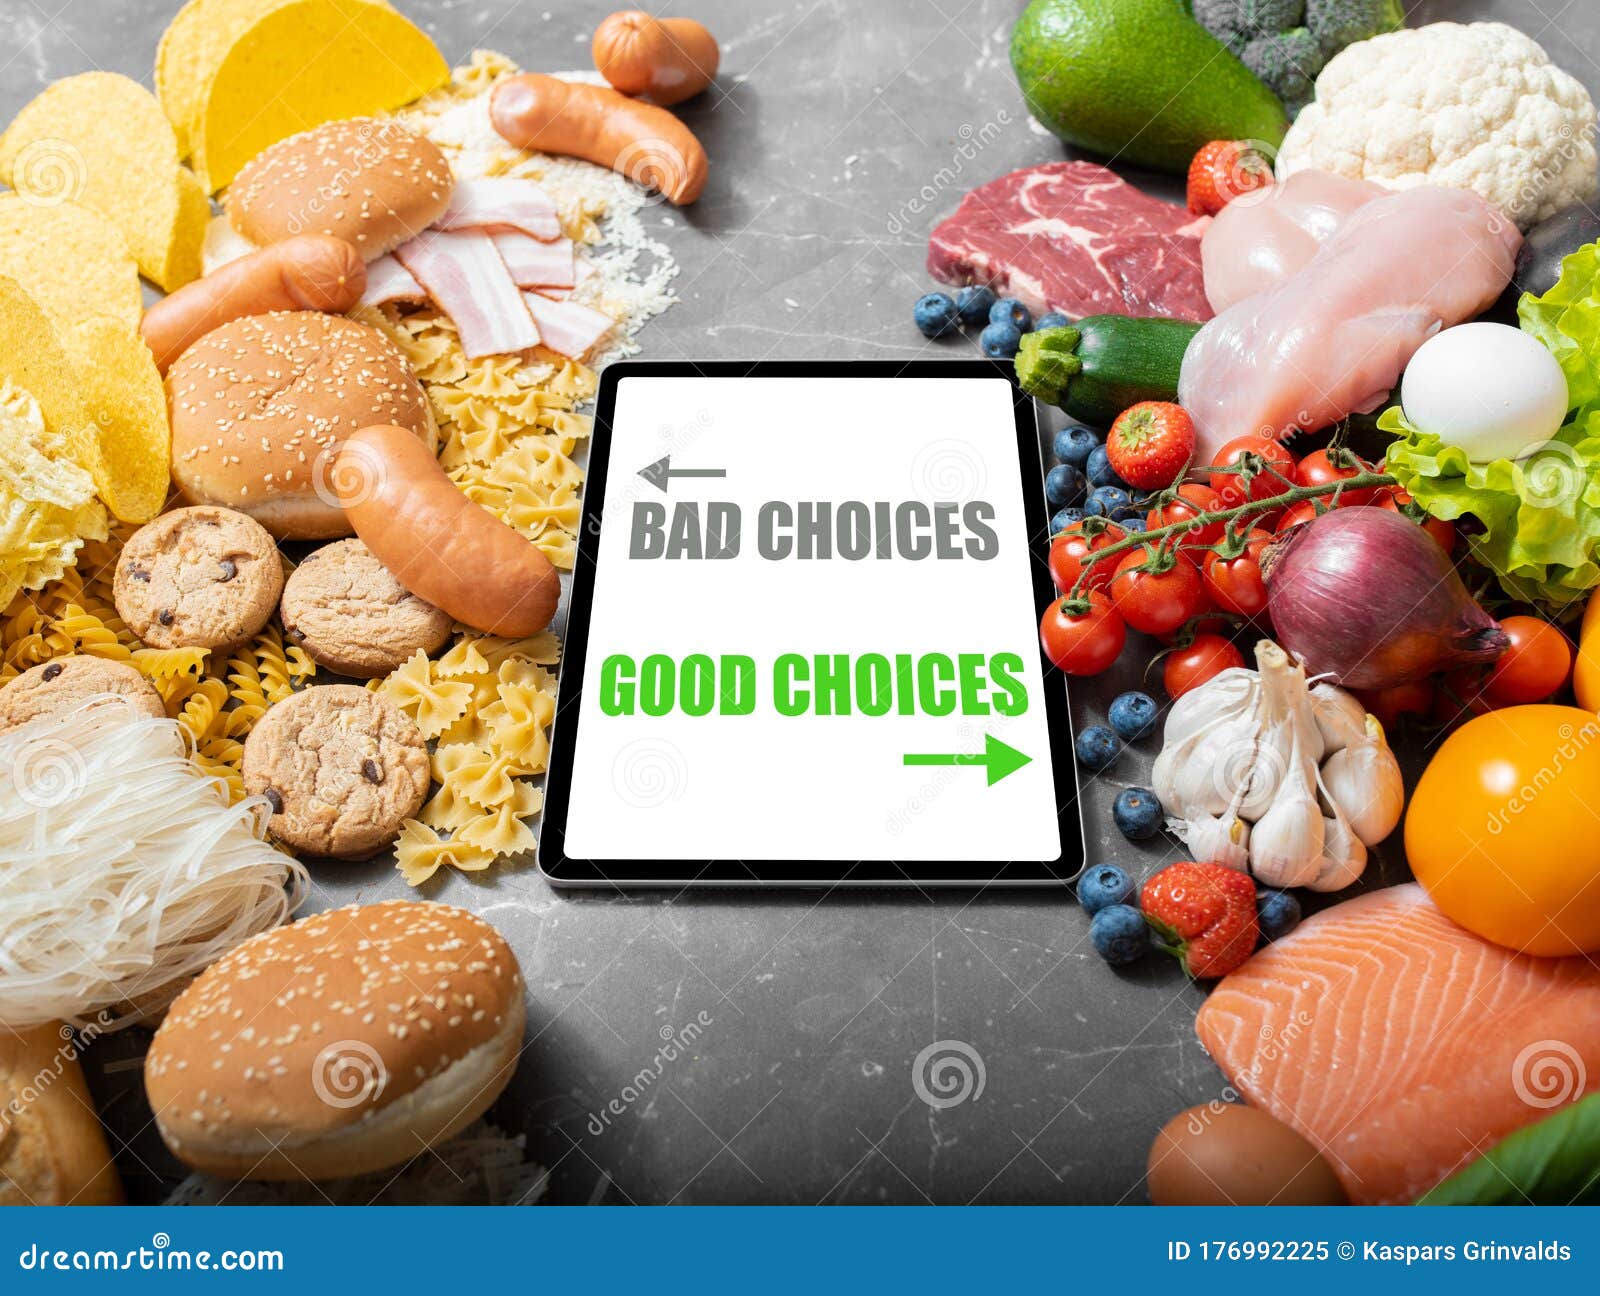 unhealthy foods versus healthy foods